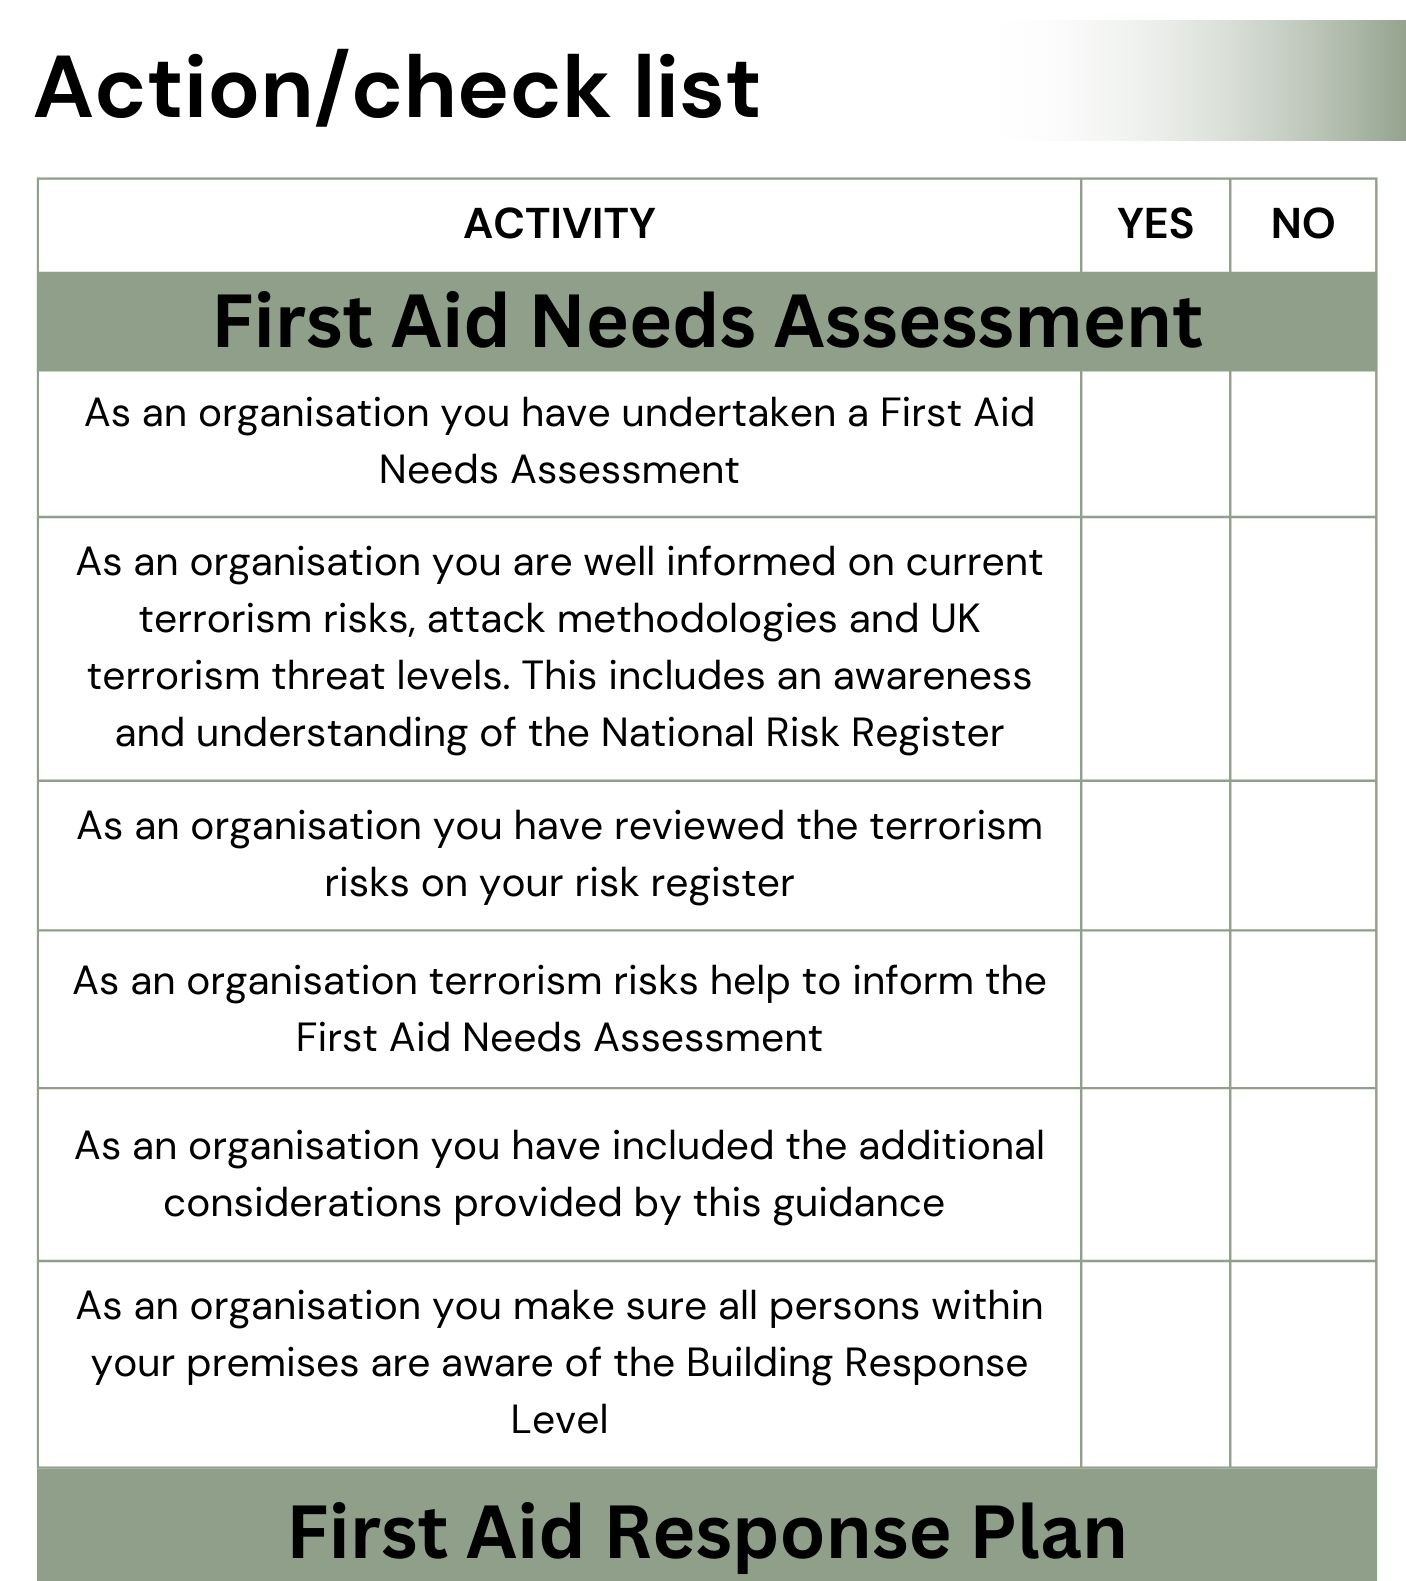 First aid action/checklist